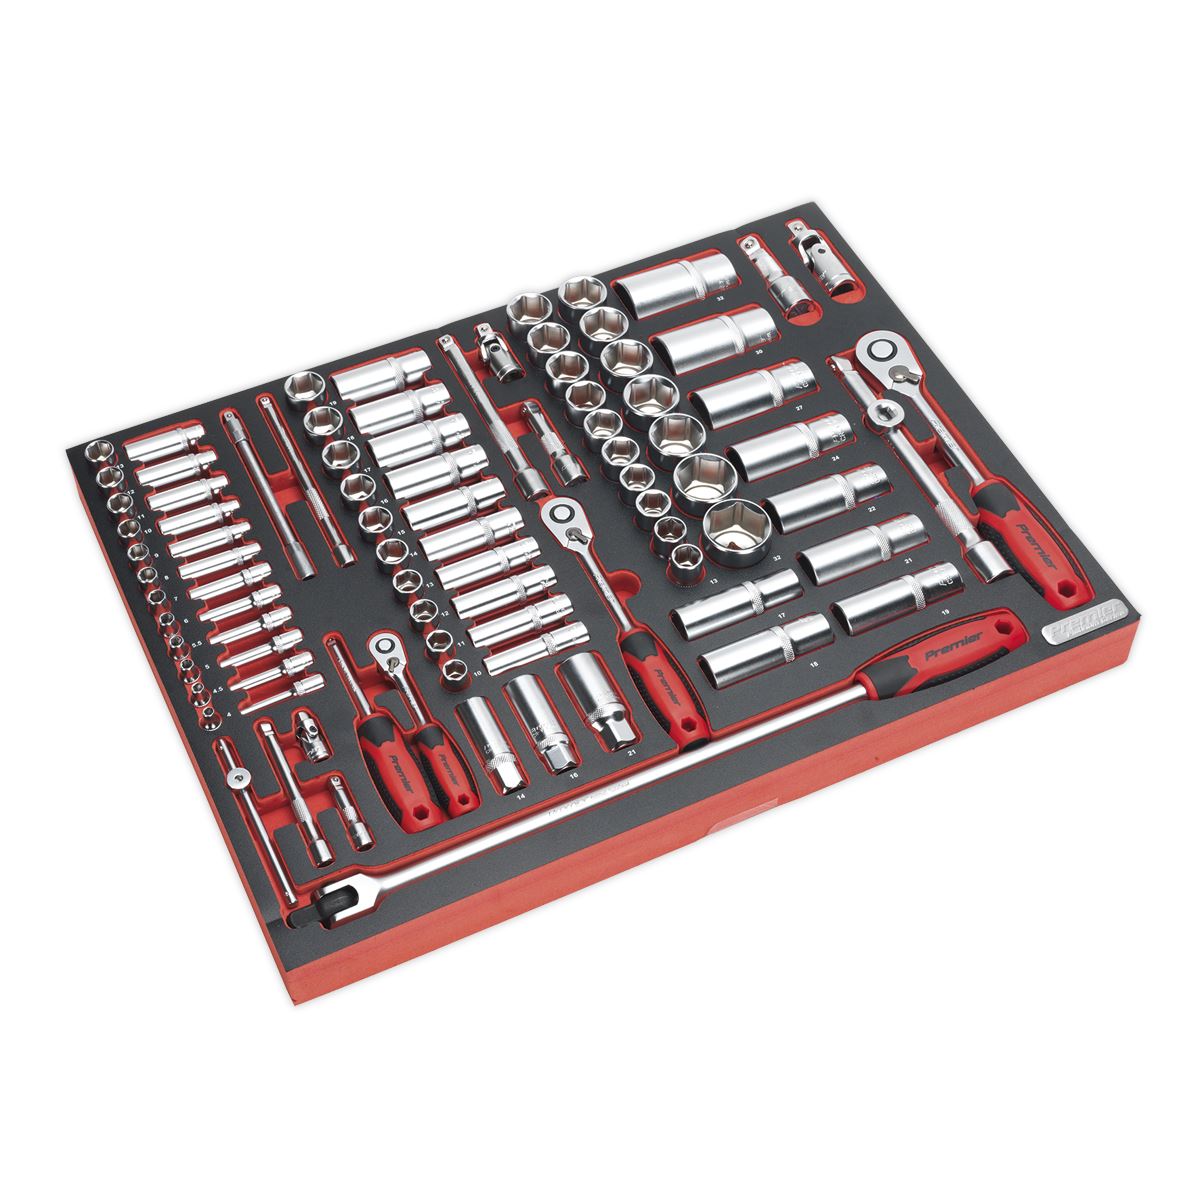 Sealey Premier Platinum Tool Tray with Socket Set 91pc 1/4", 3/8" & 1/2"Sq Drive